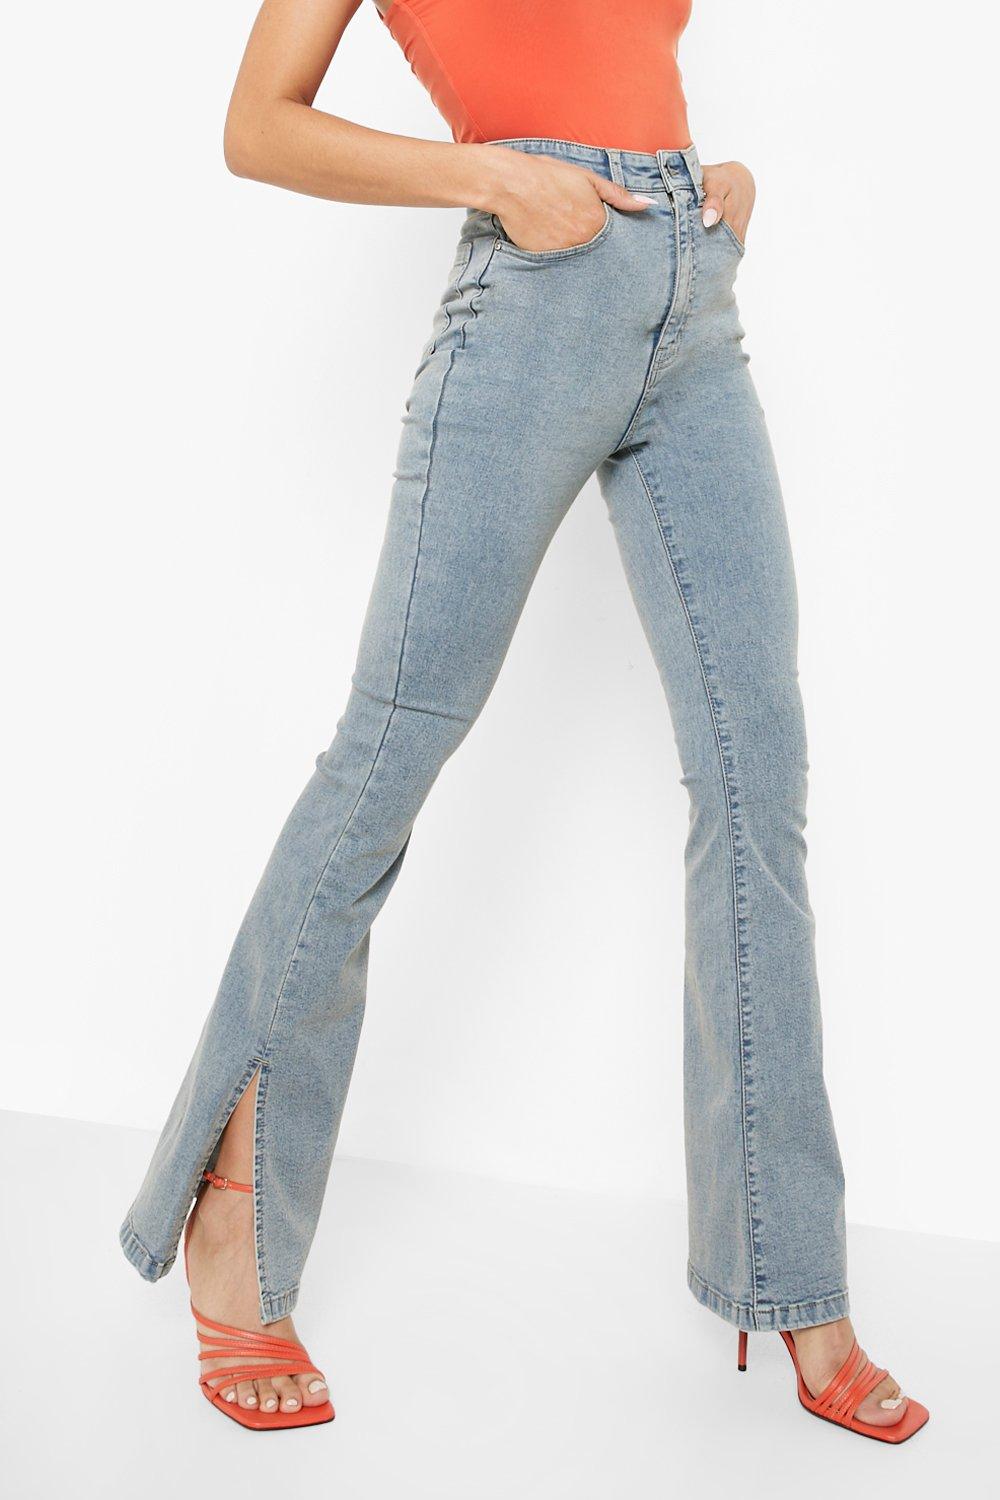 Women's Topshop Flare Jeans